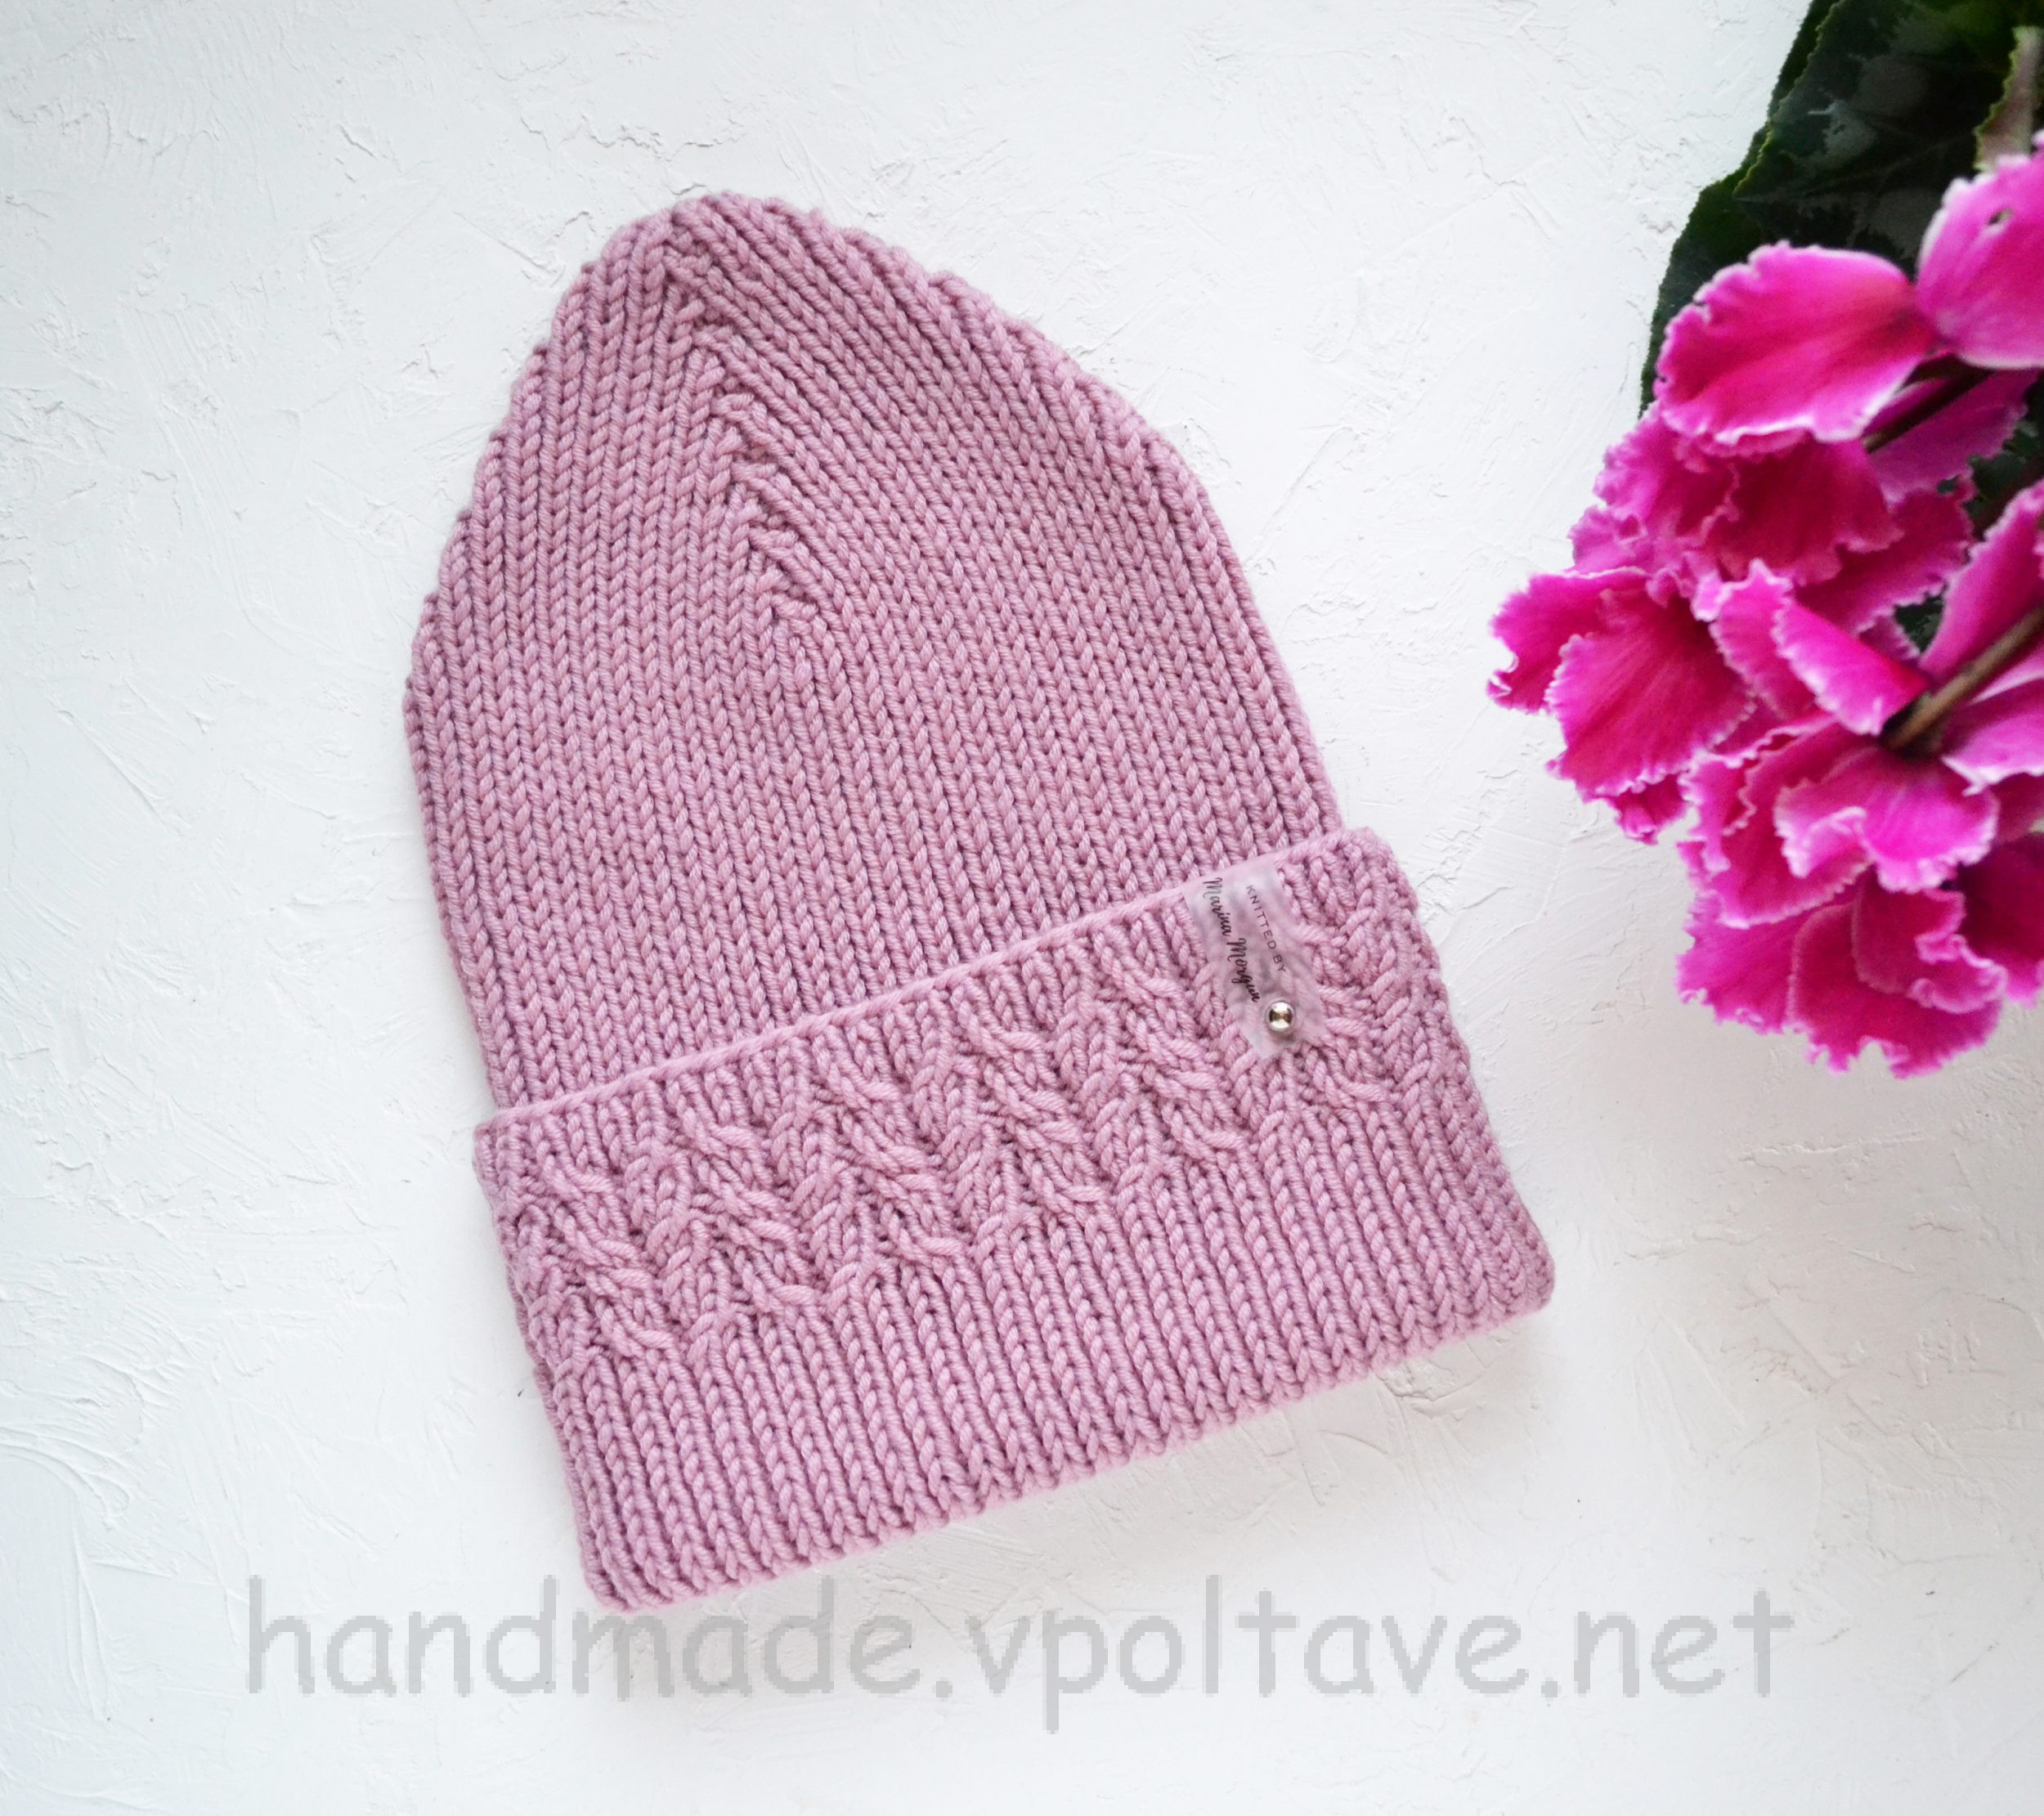 women's hat knitting